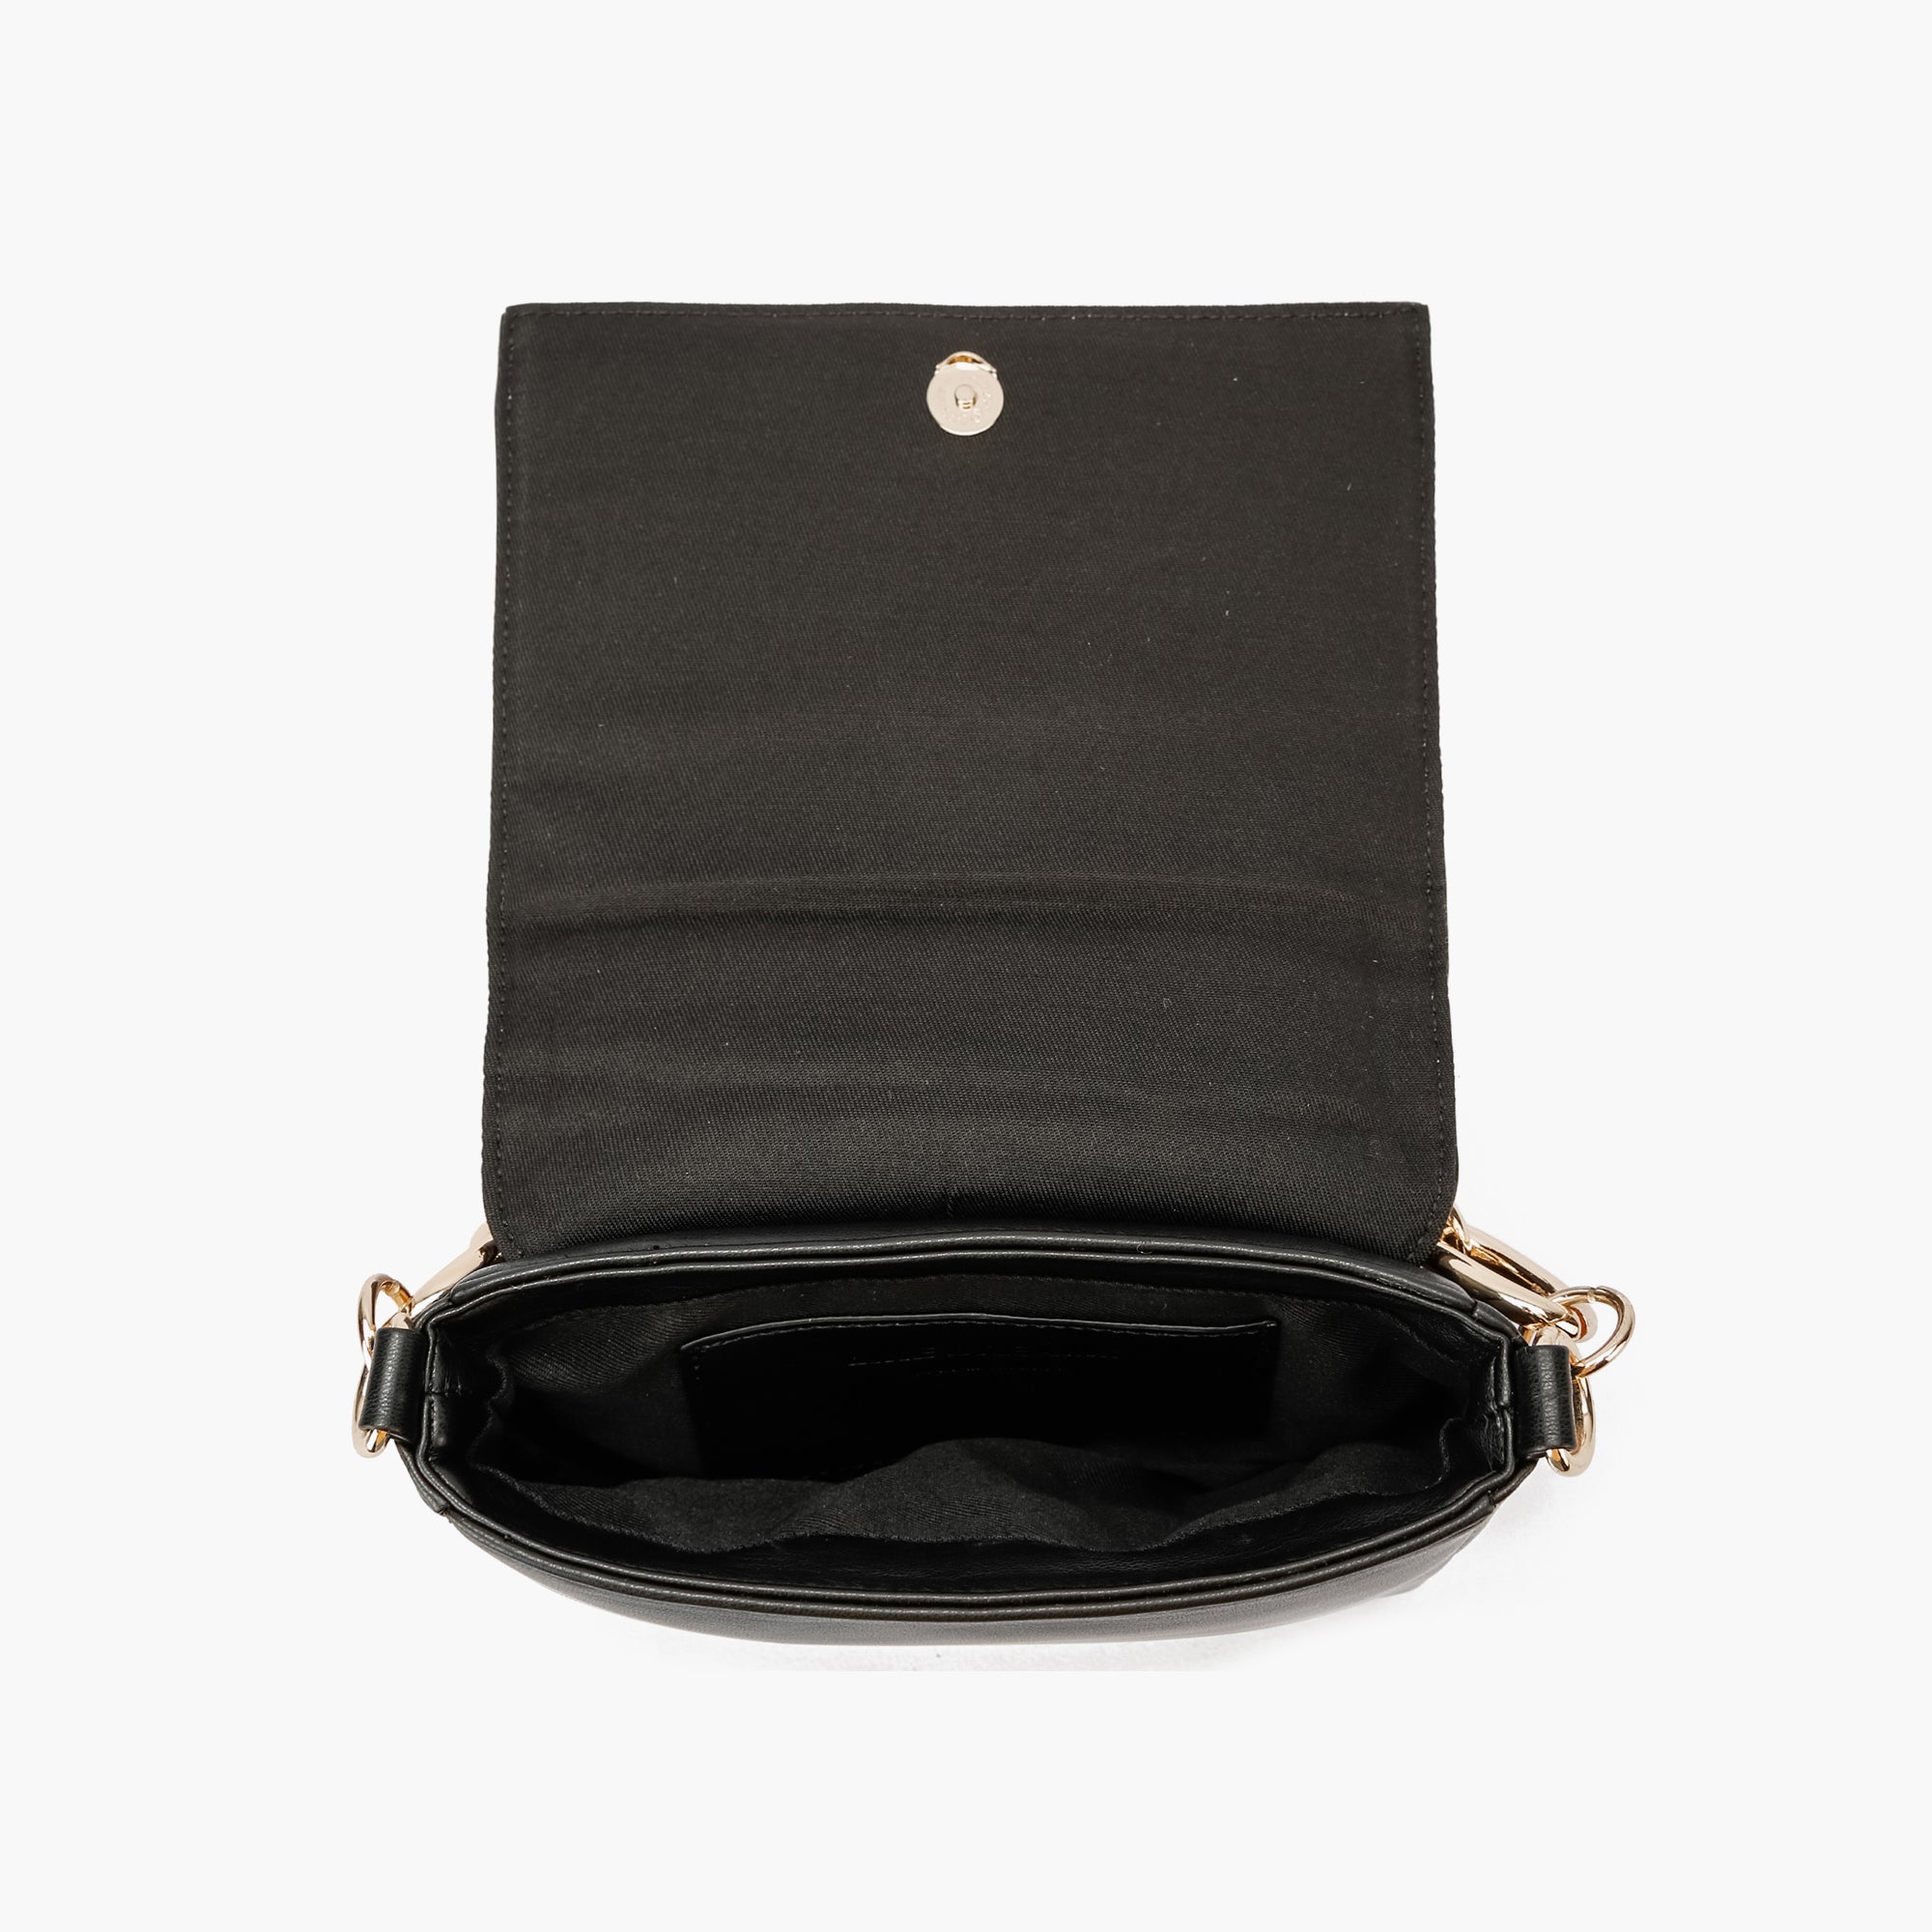 Empreinte Vavin PM Black Crossbody Bag (Authentic Pre-Owned) – The Lady Bag